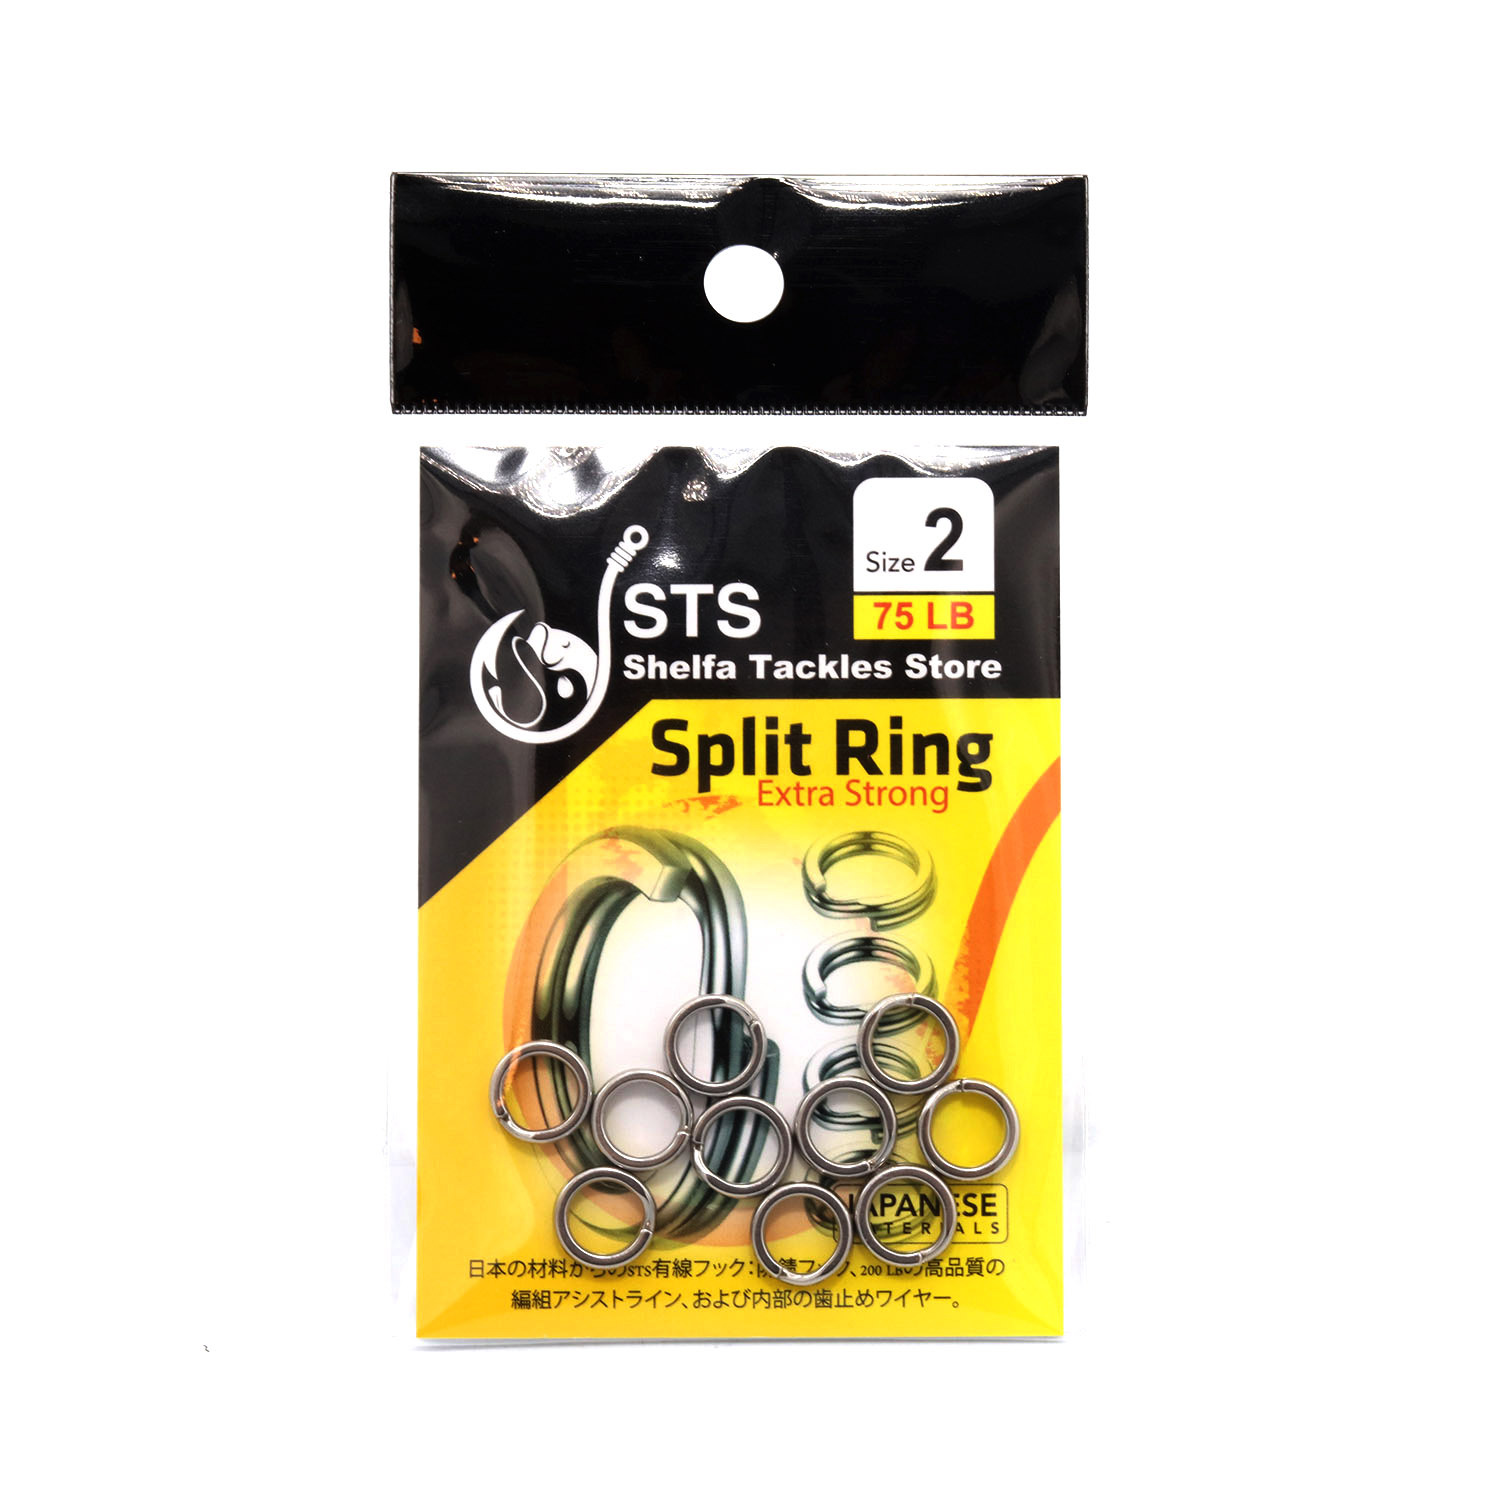 STS Split Ring Size 2